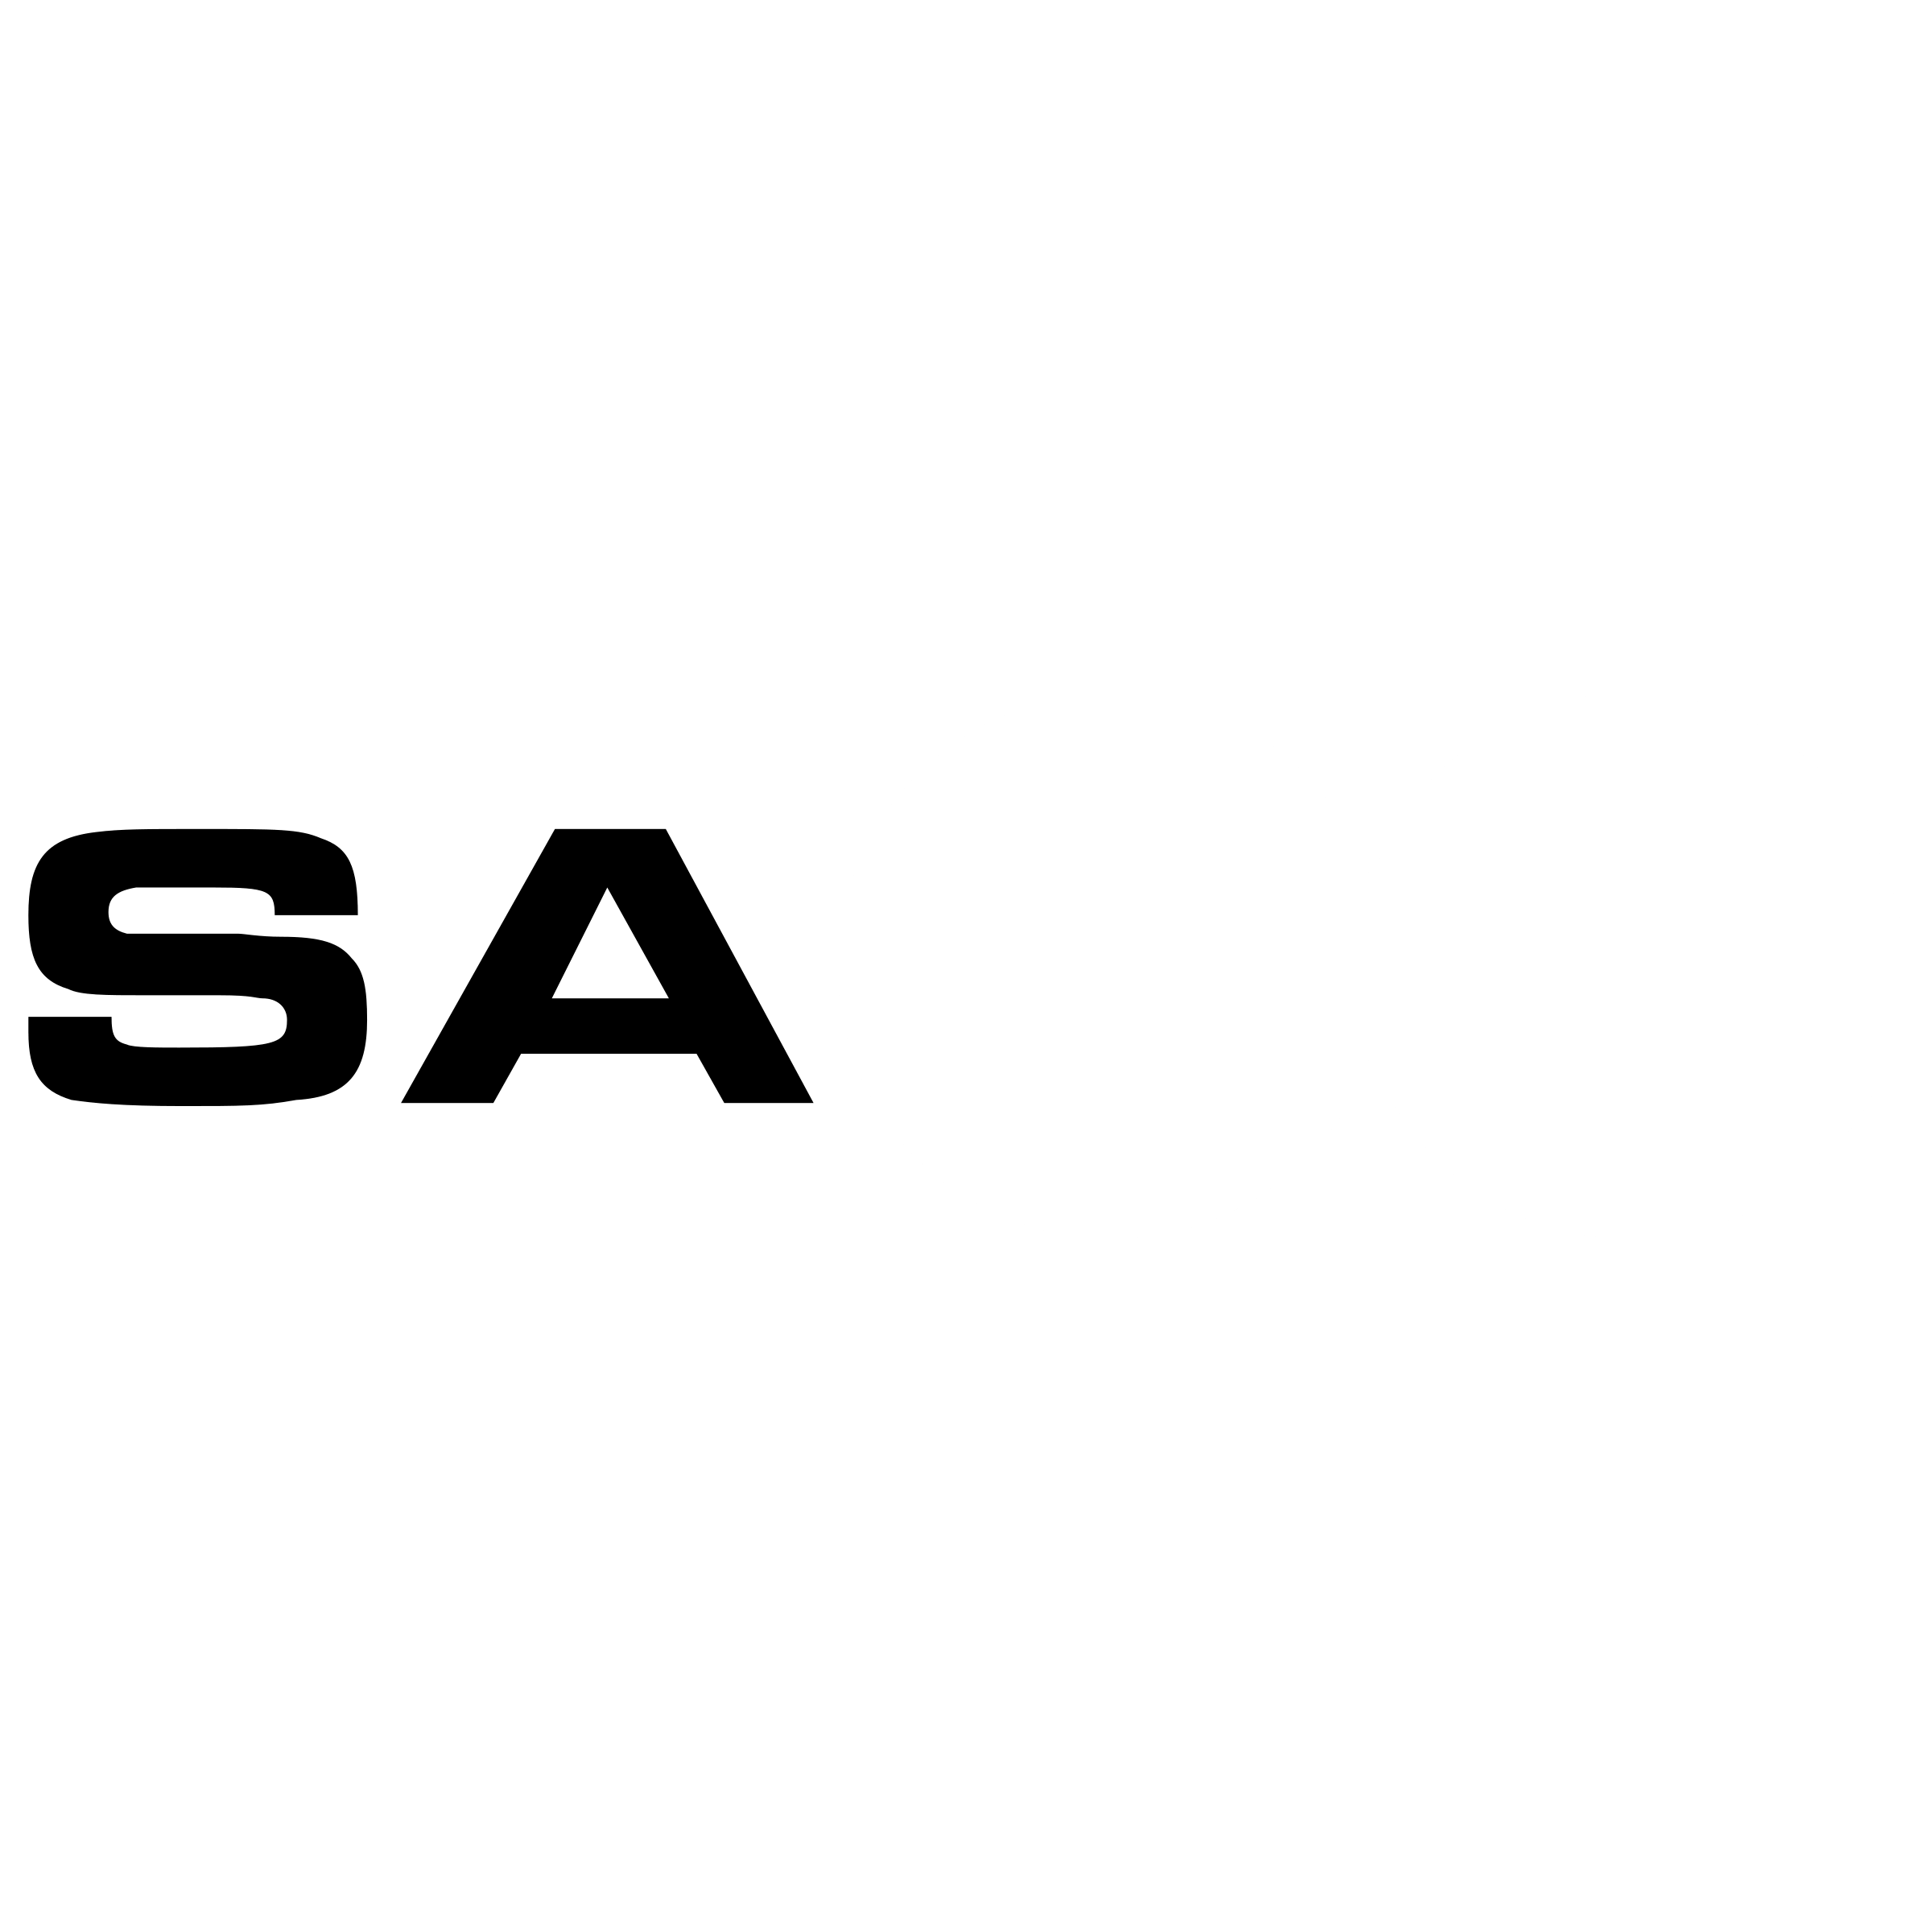 Sasa Logo - Sasa Logo PNG Transparent & SVG Vector - Freebie Supply